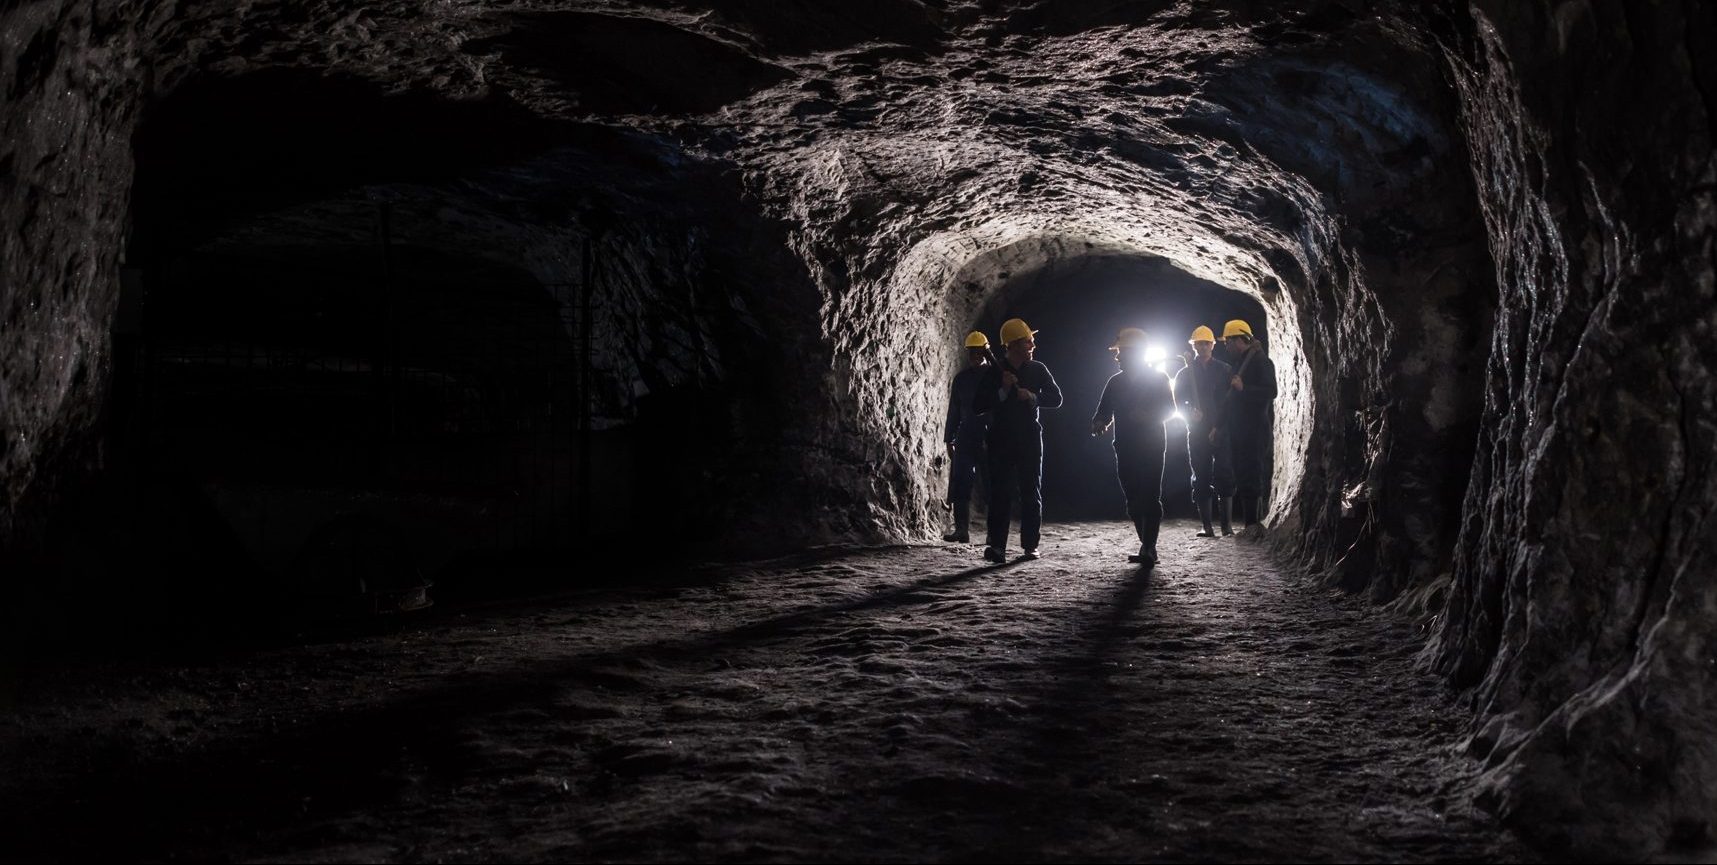 Coal miners talking and walking through a coal mine